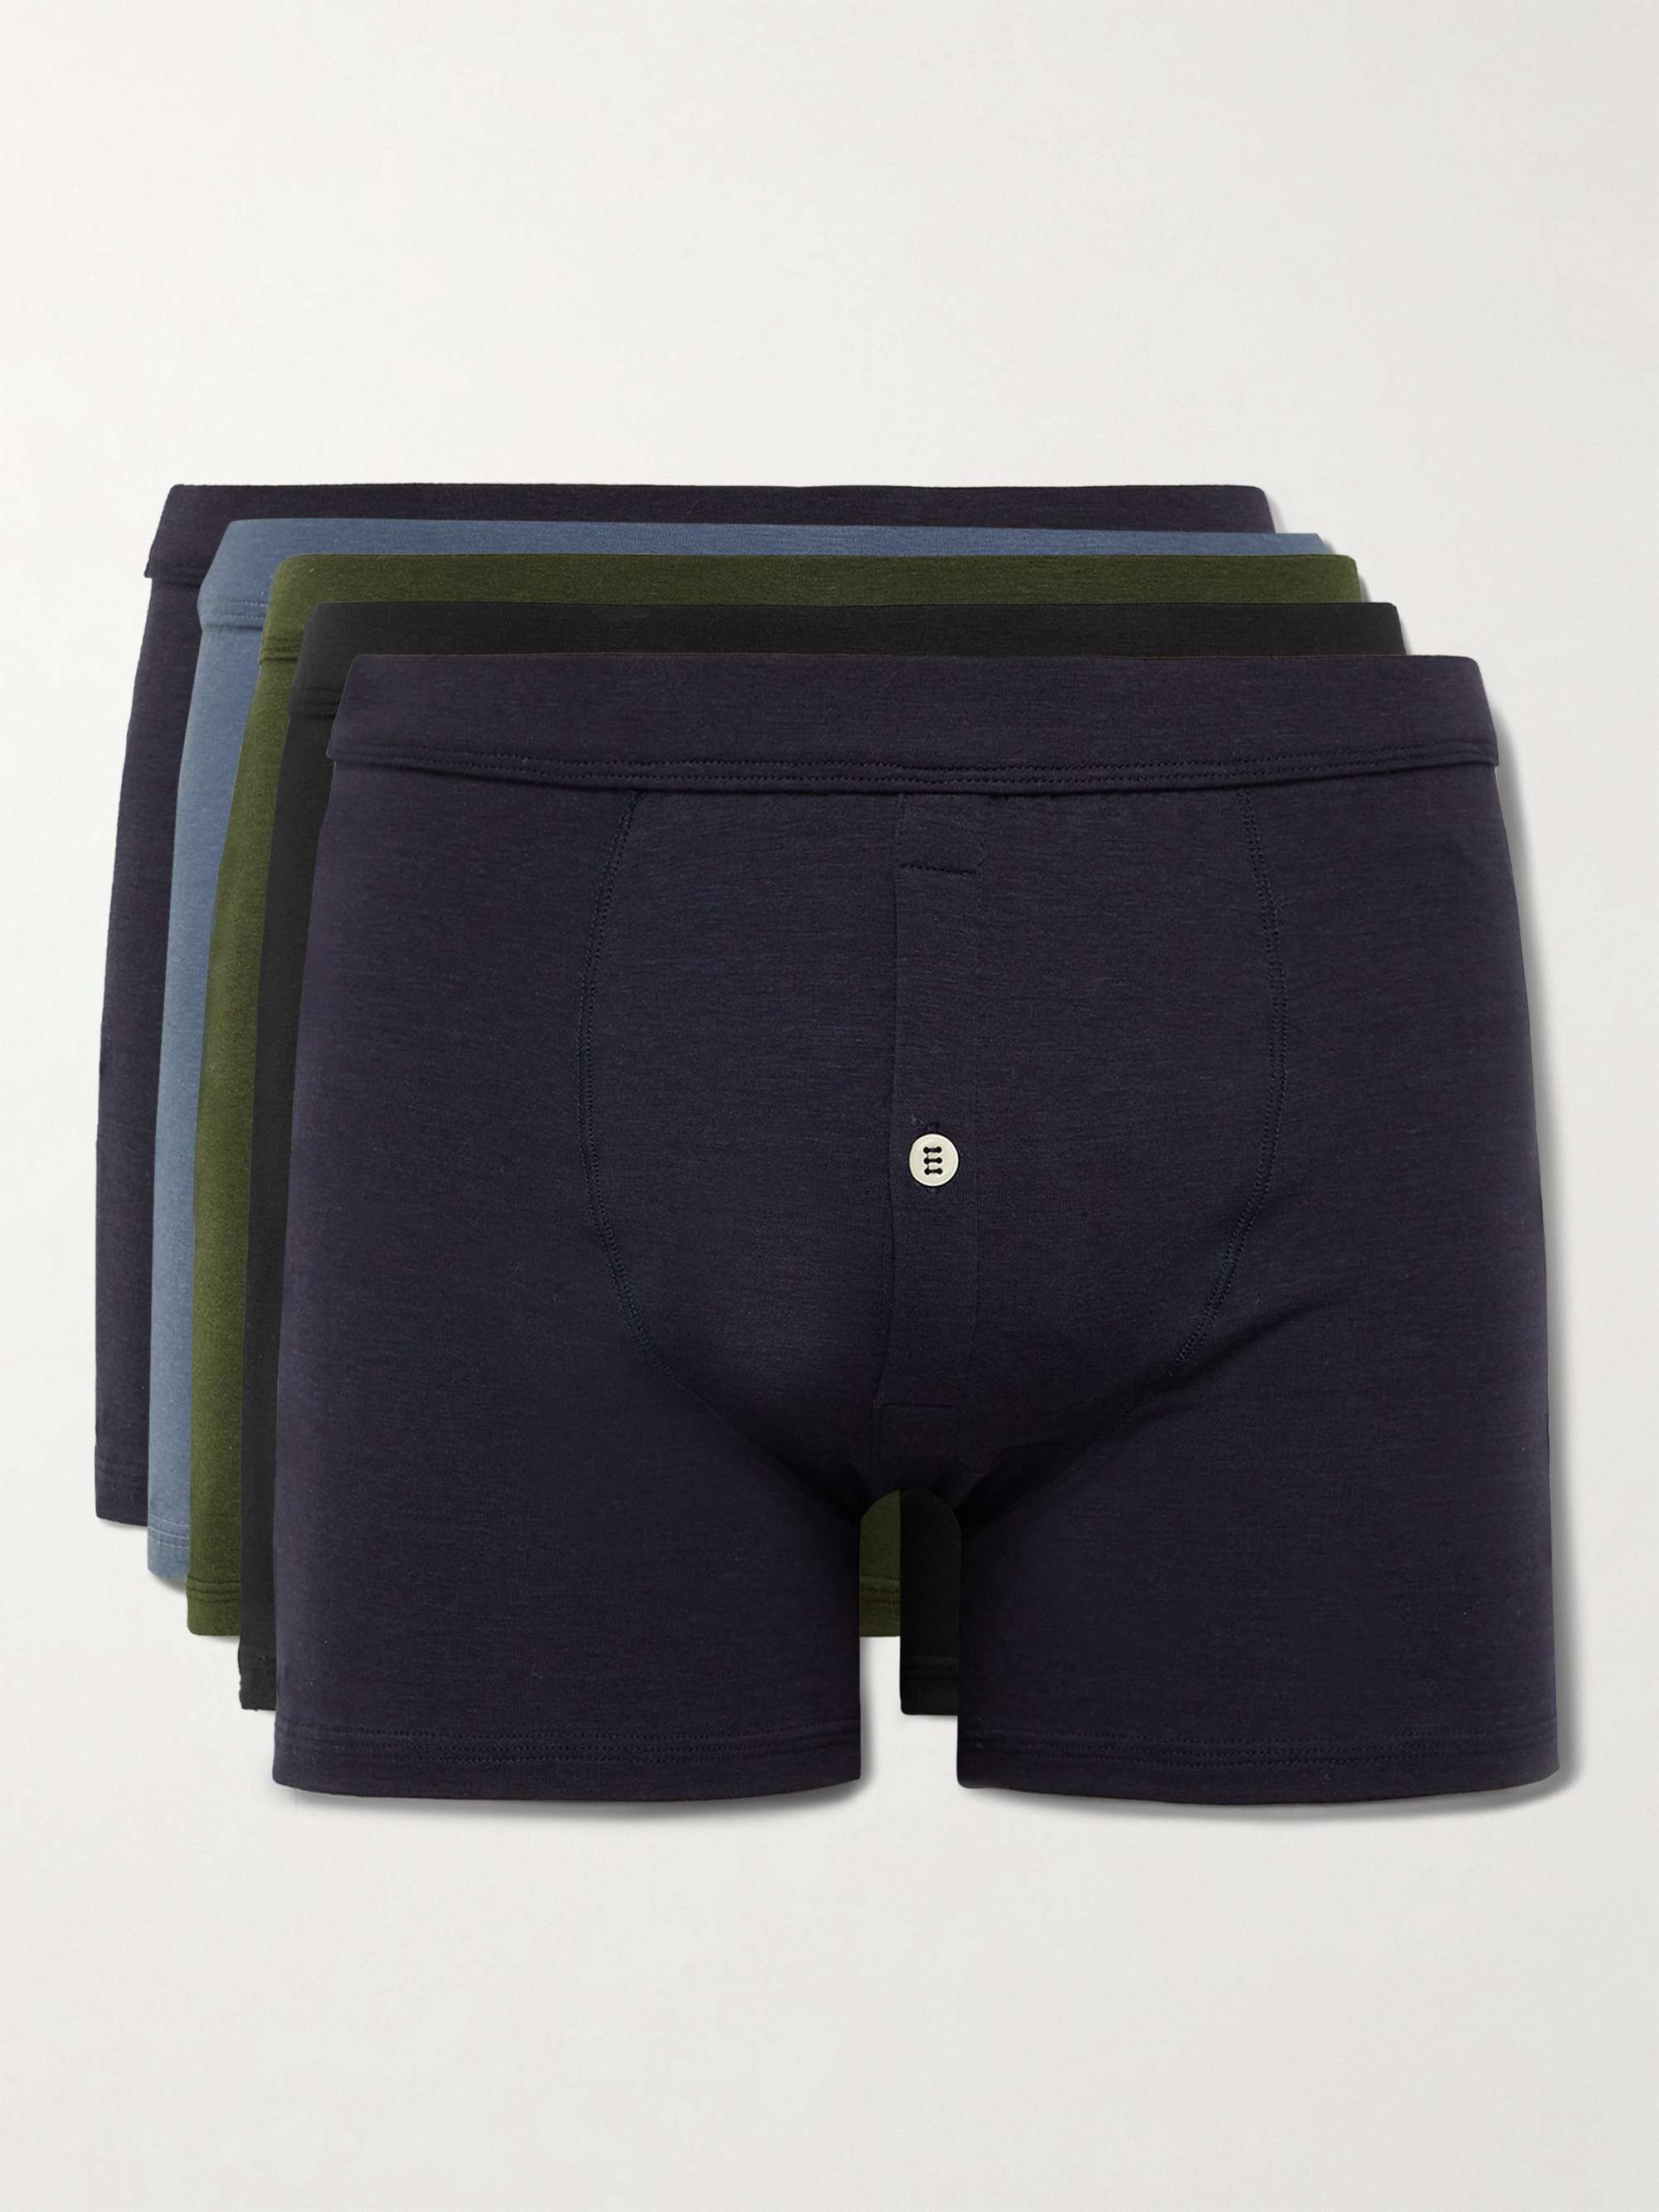 Mens Seamless Boxers Trunks Underwear Design Colour Stretch Brief M L XL 3 PACK 